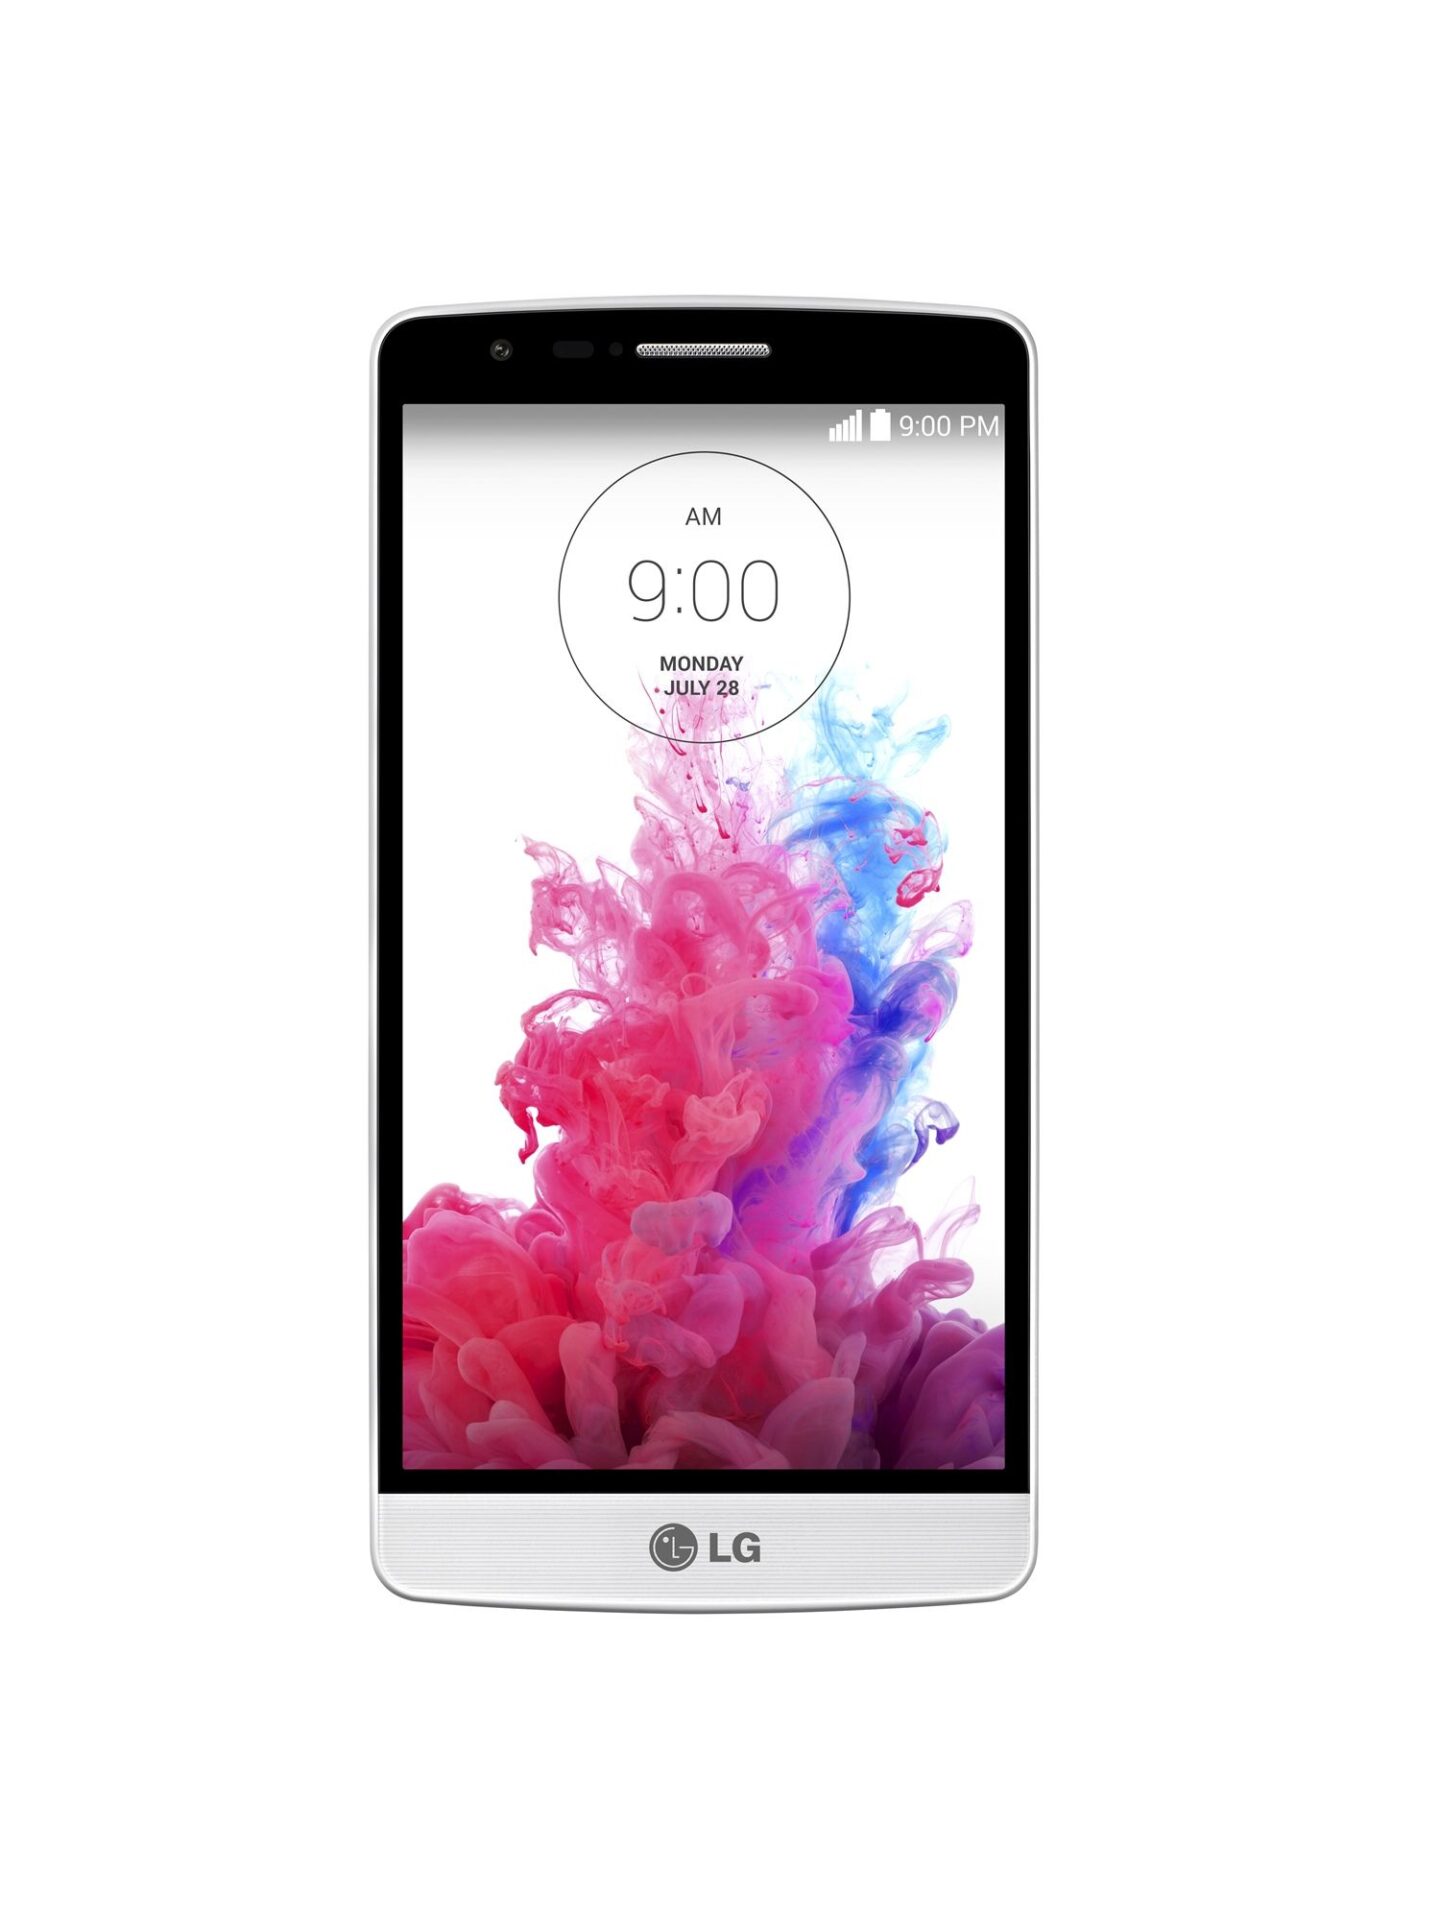 LG G3 smartphone in Nigerian market debut